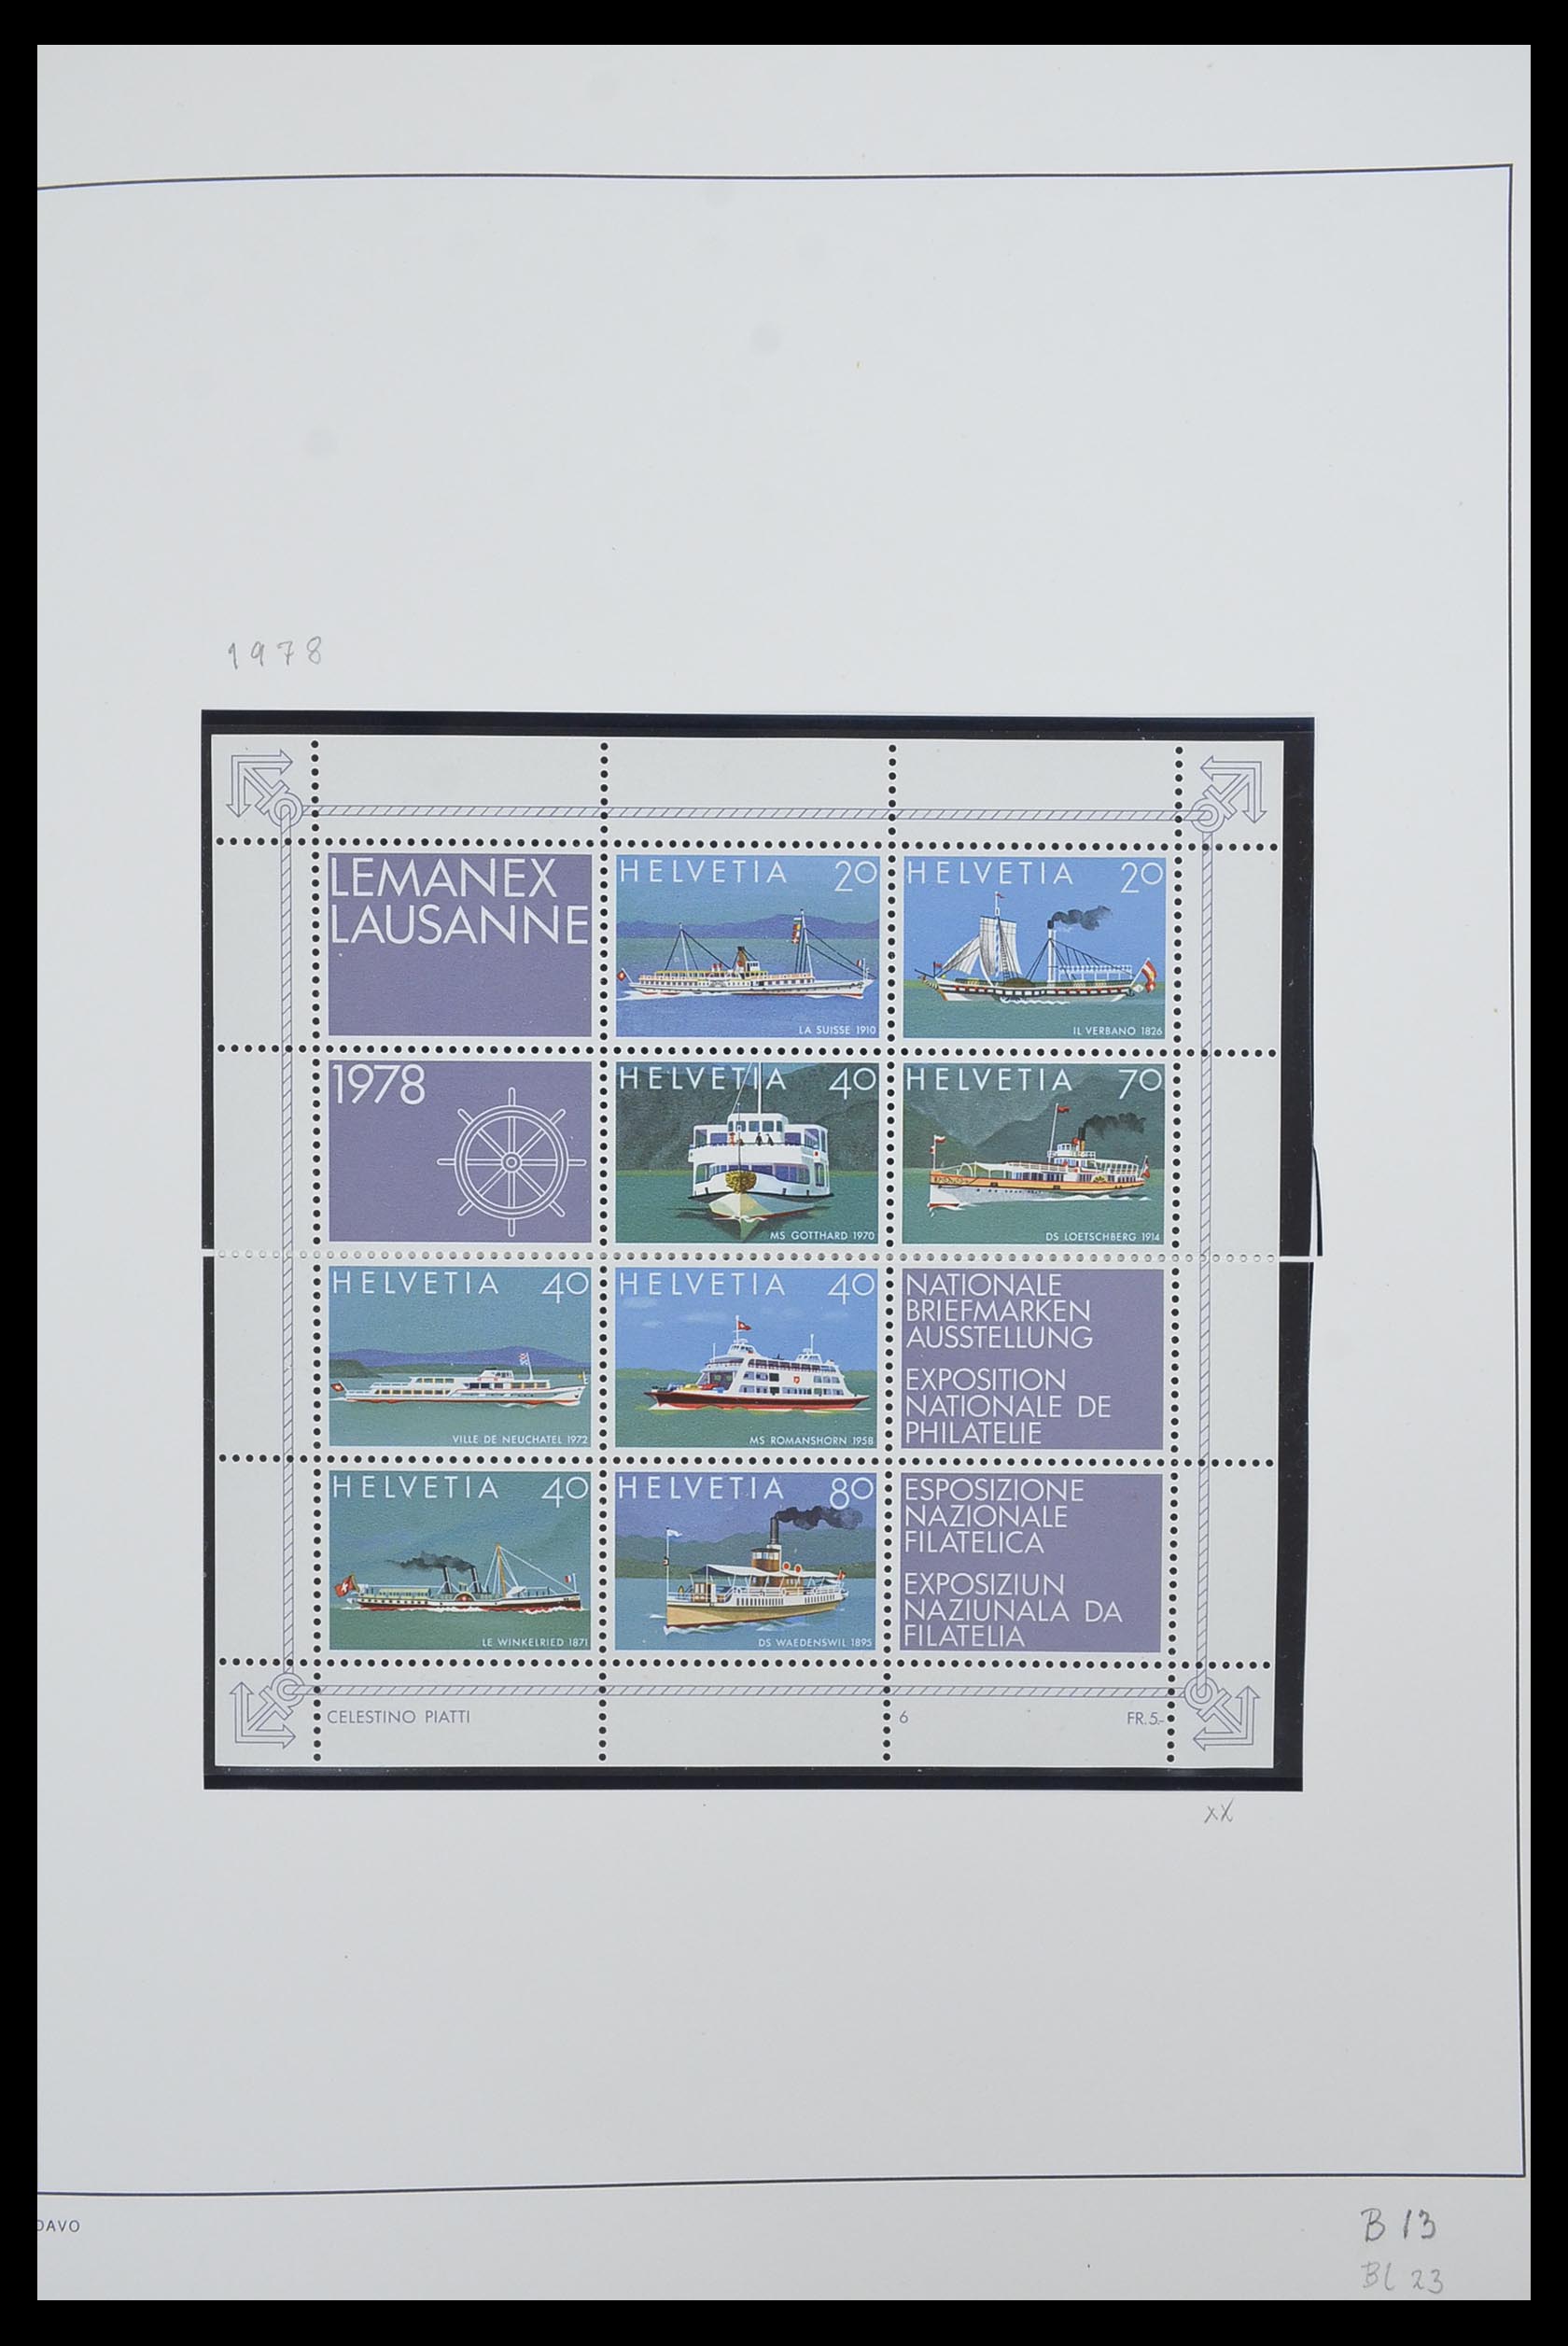 33556 148 - Stamp collection 33556 Switzerland 1862-2000.